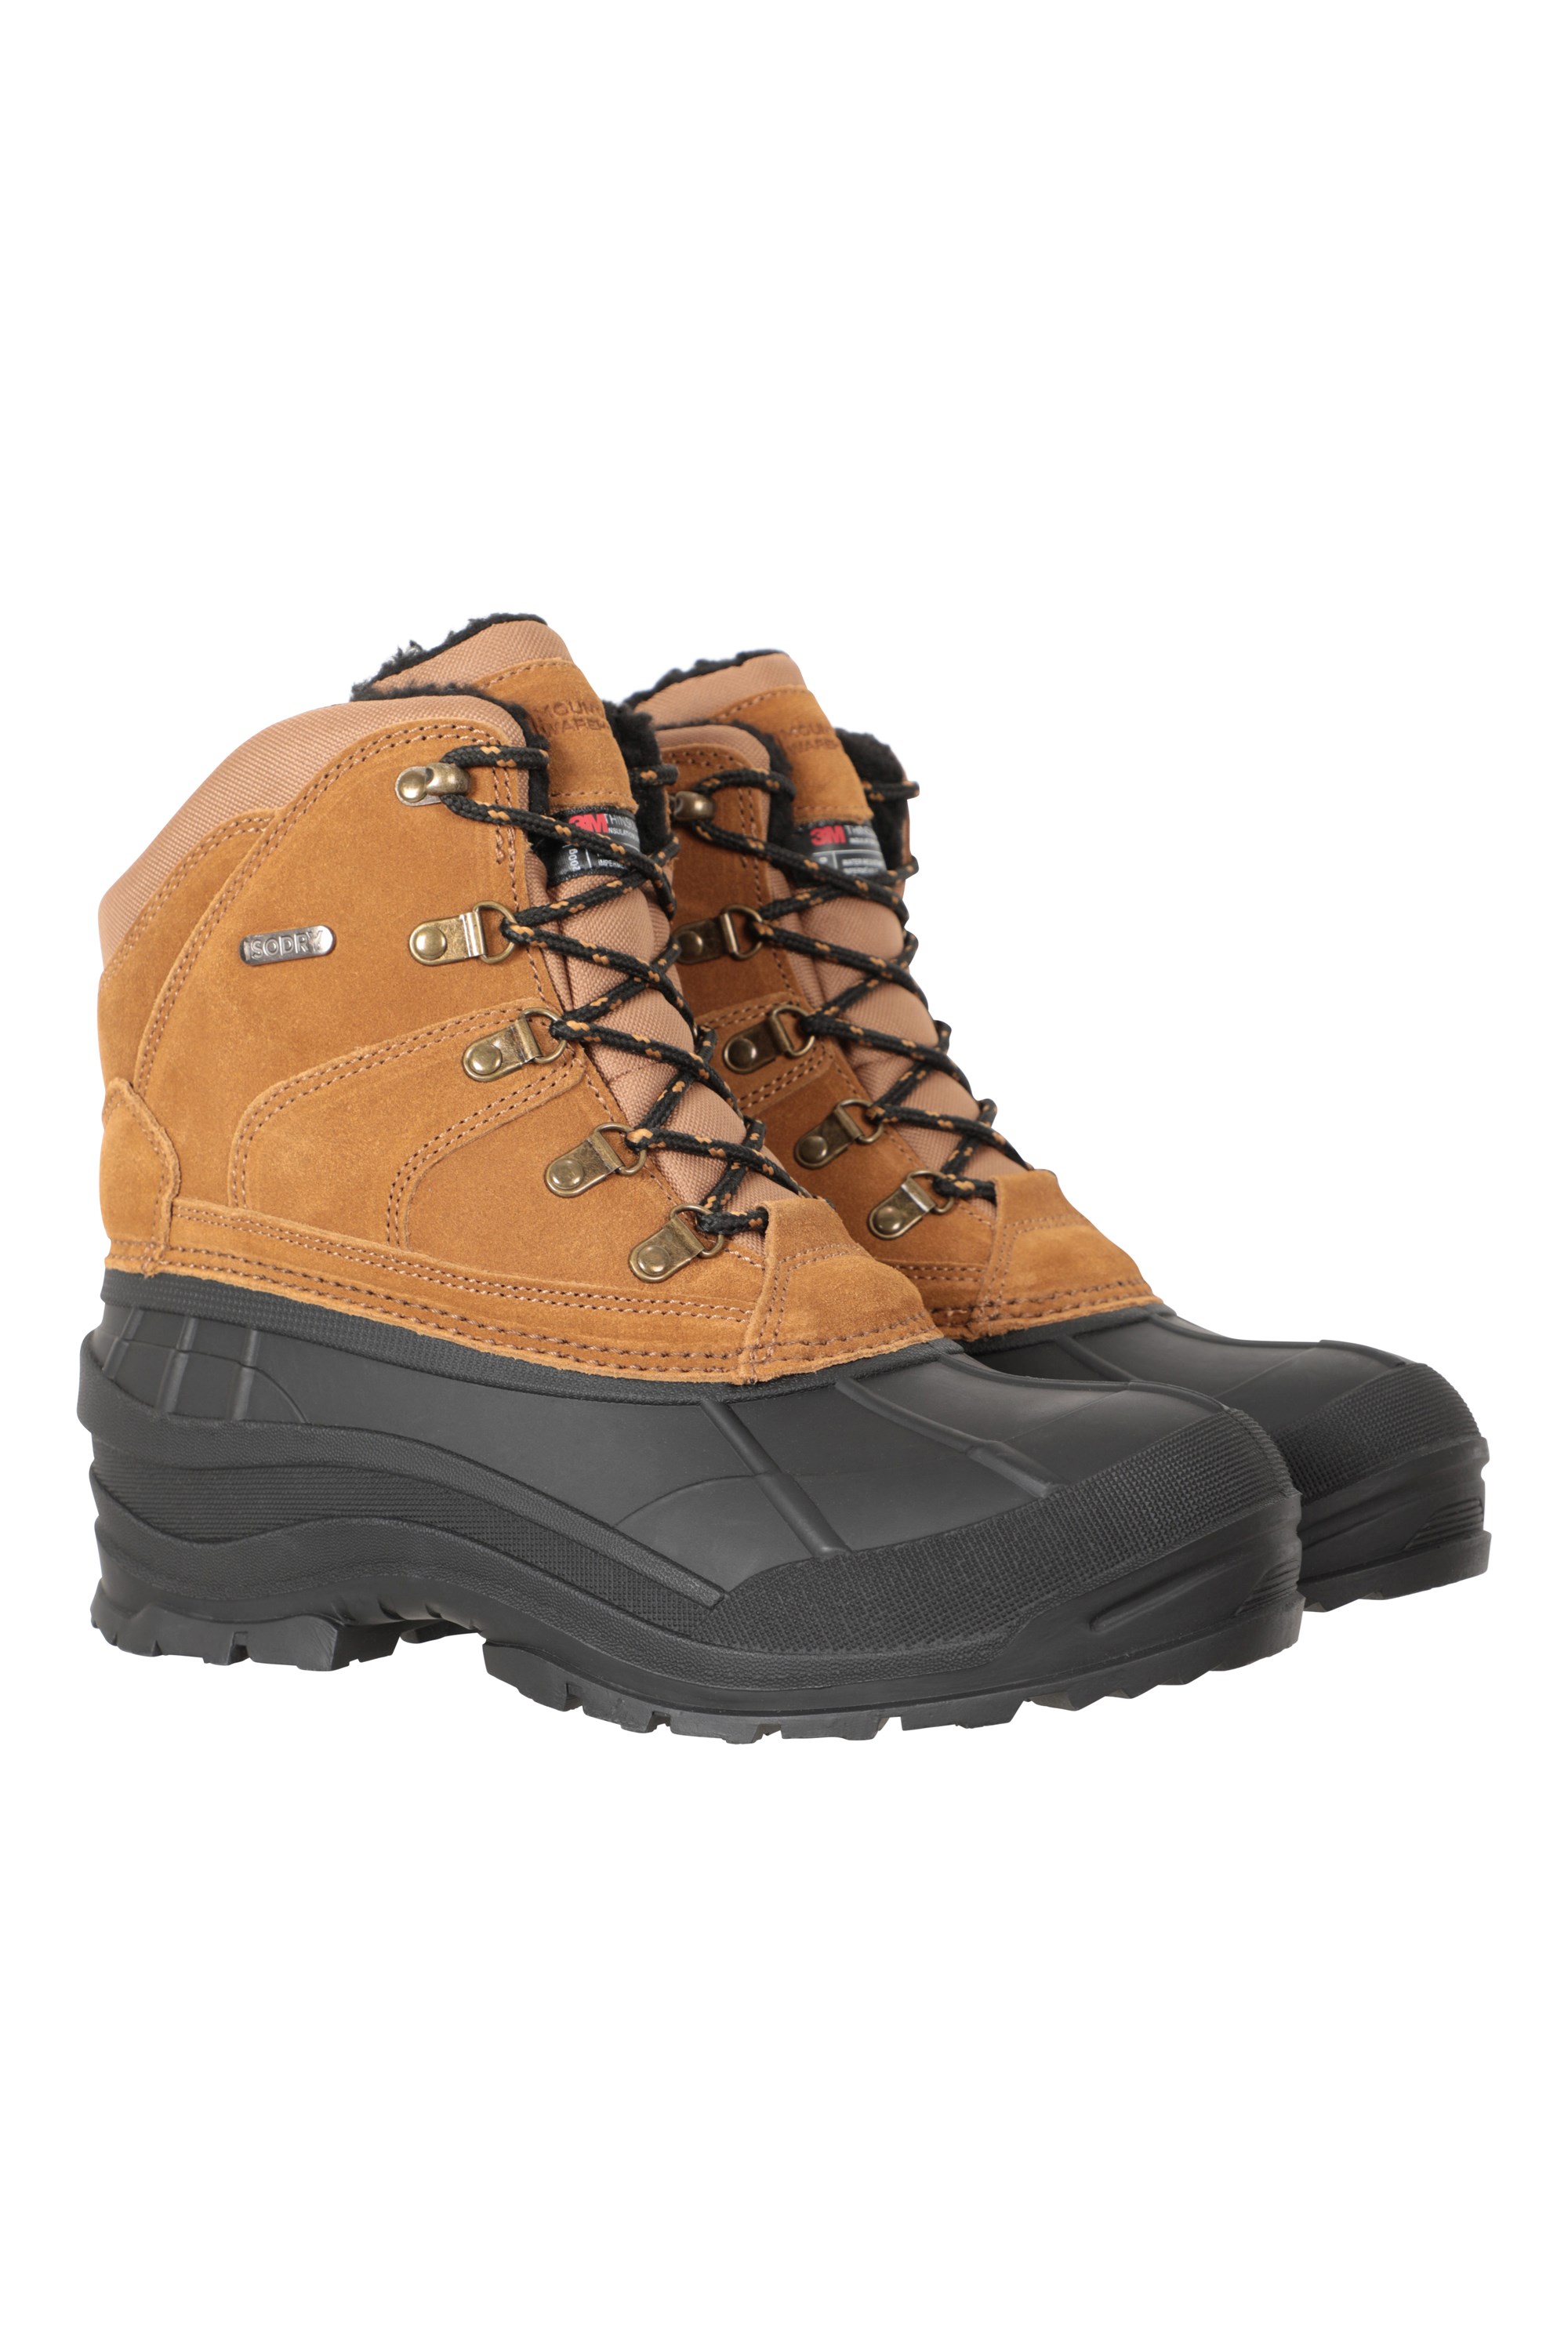 Mountain Warehouse Range Mens Snow Boots - Beige | Size 12